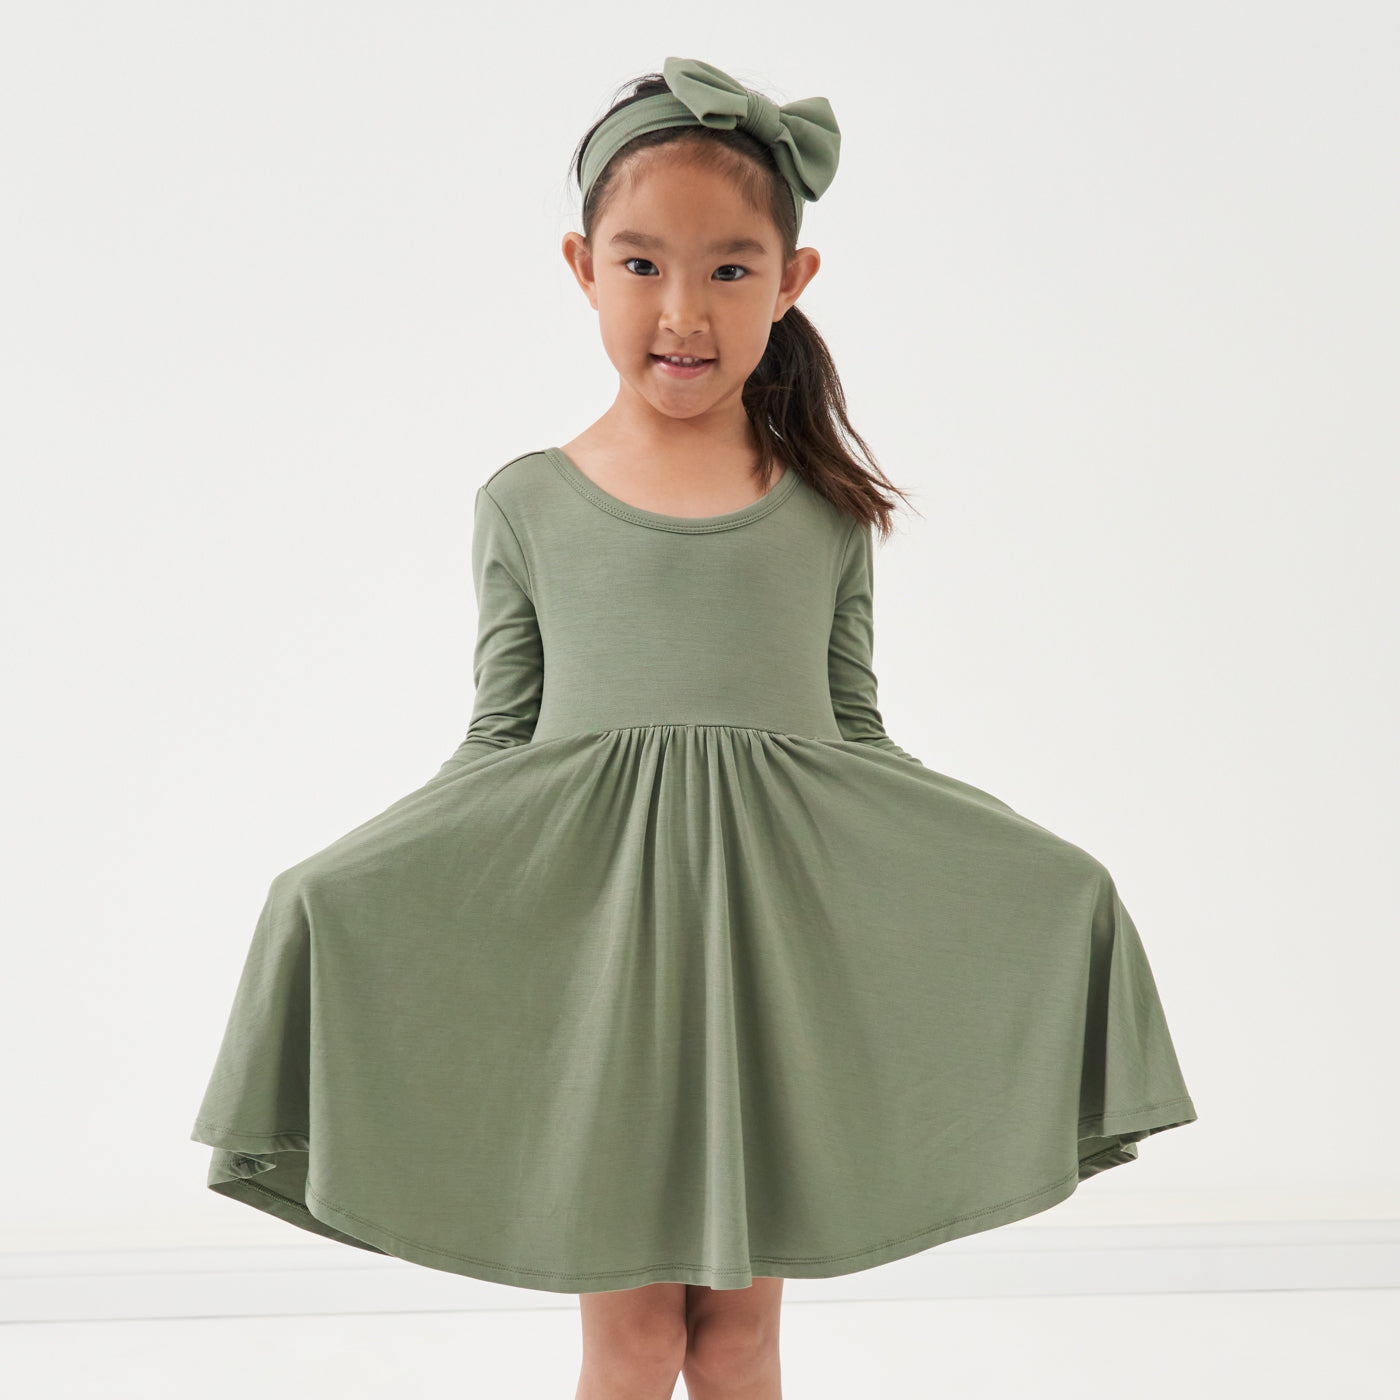 Child wearing a Moss luxe bow headband and matching twirl dress